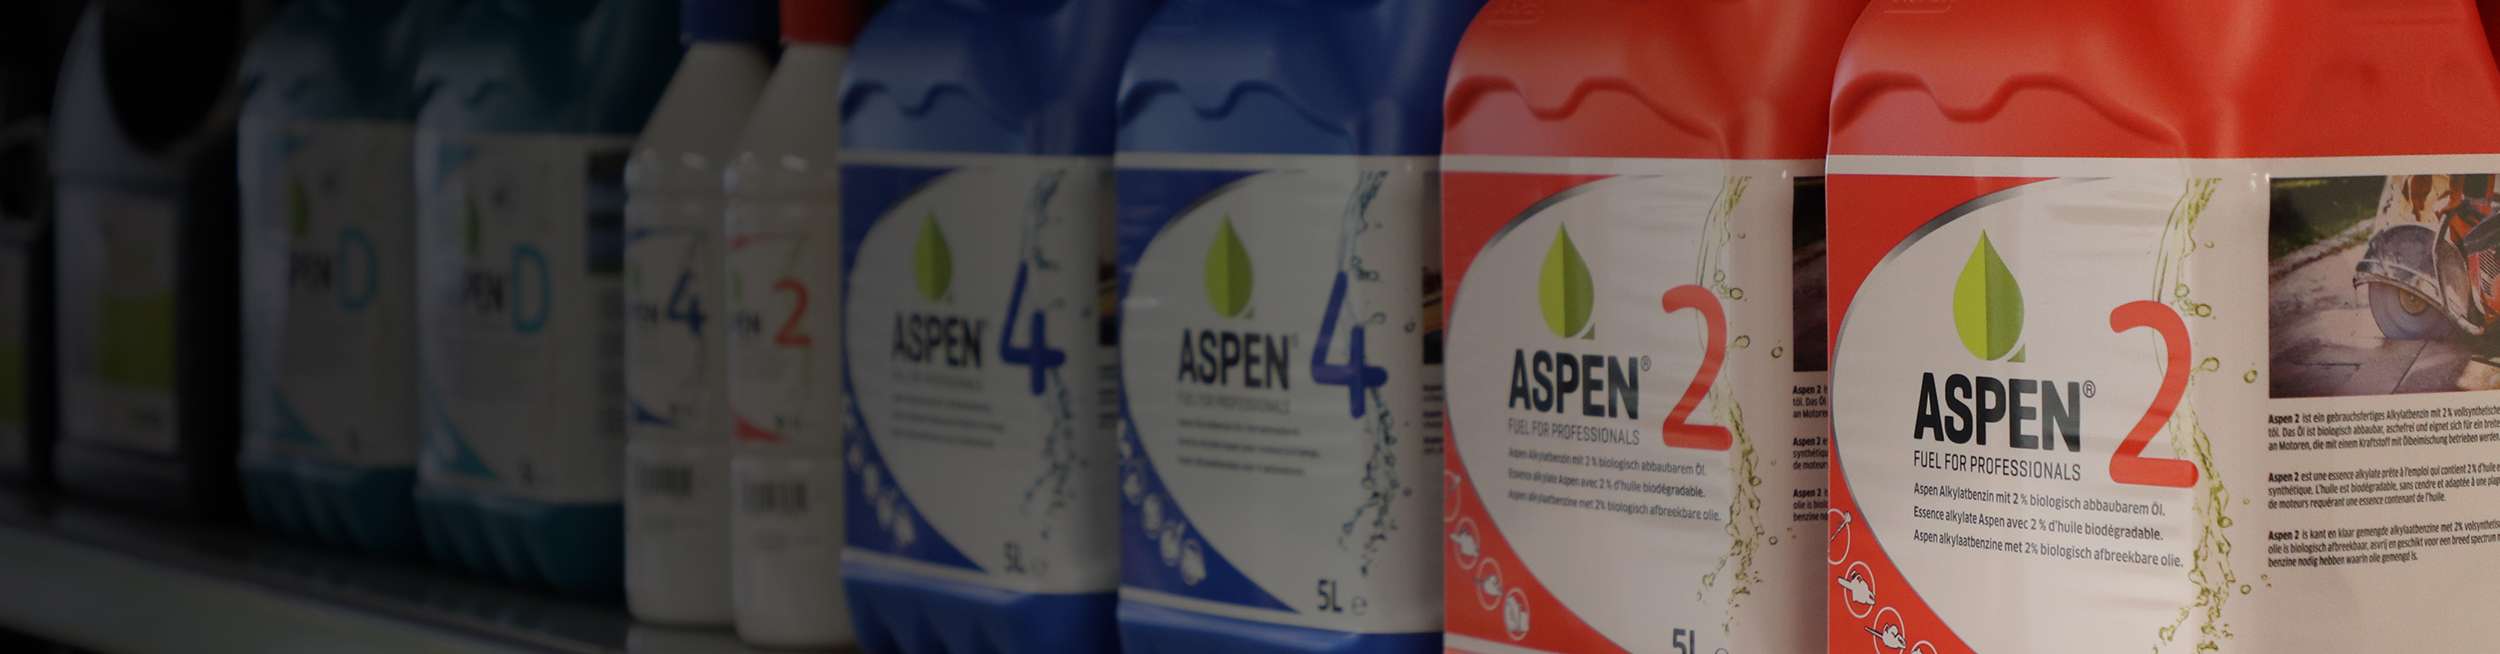 Aspen - Cans - producten-2